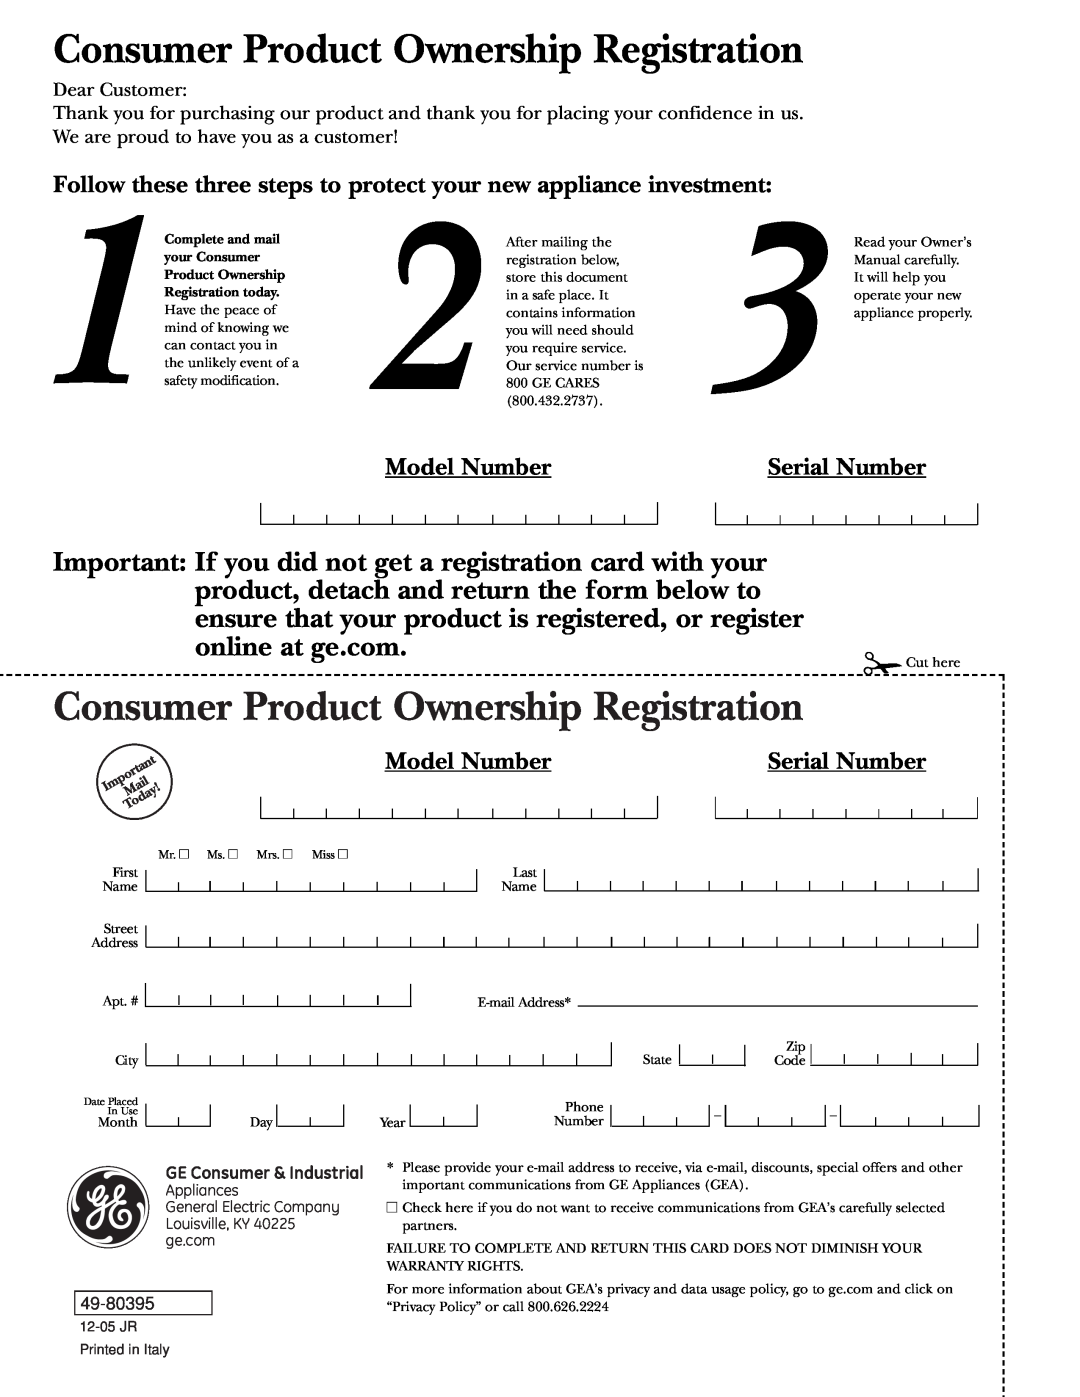 GE Monogram ZV950 Model Number, Serial Number, Consumer Product Ownership Registration, 49-80395, GE Consumer & Industrial 